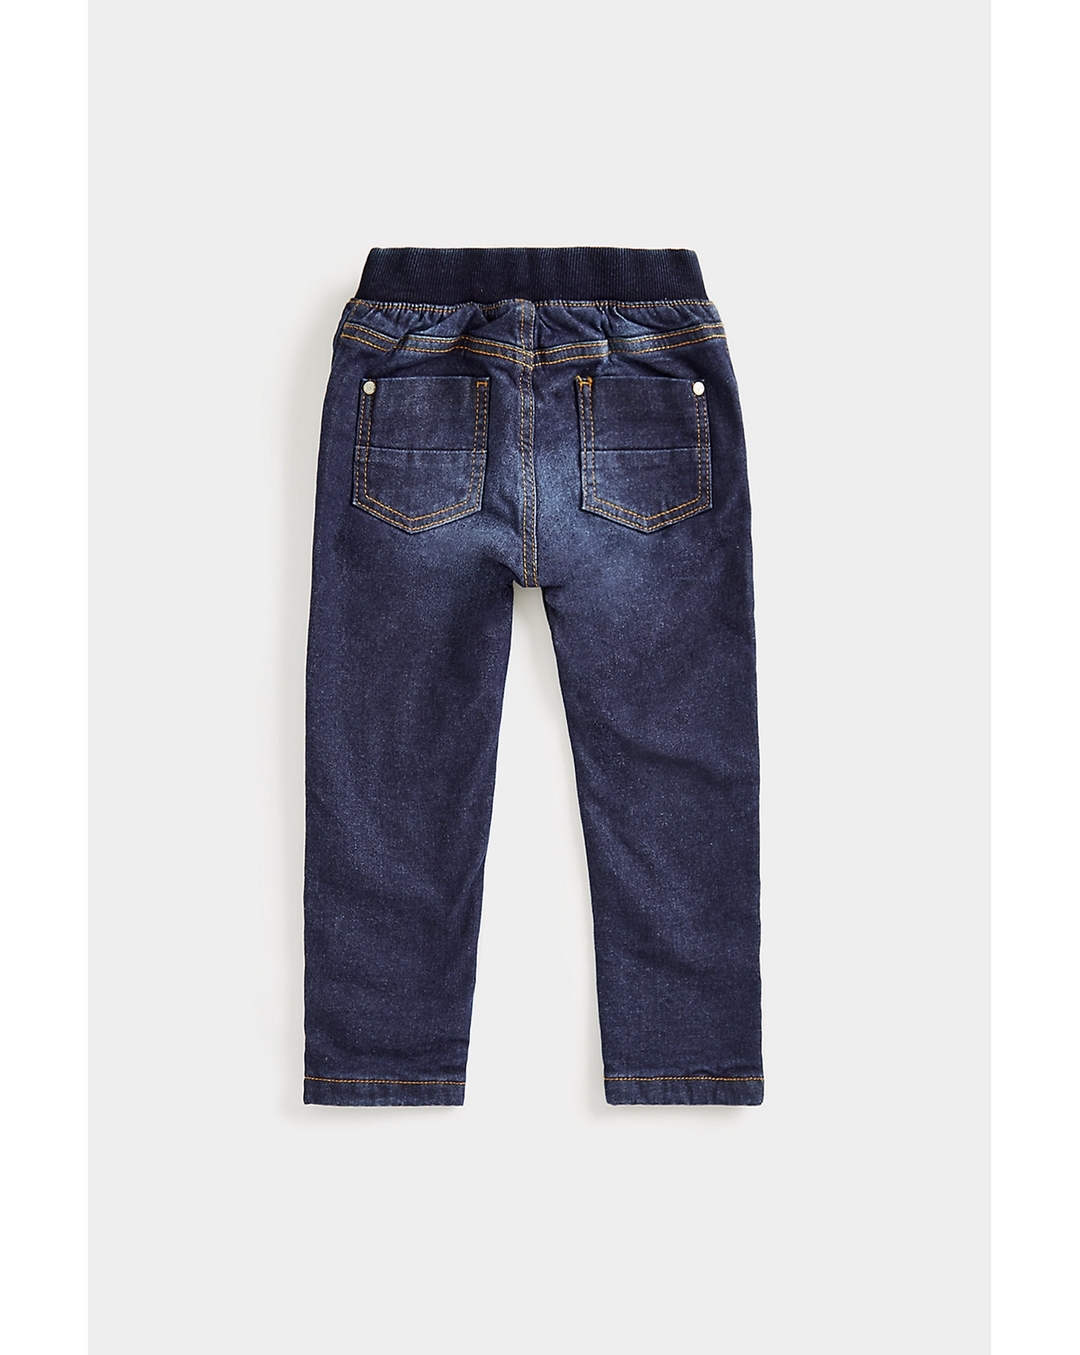 Men's Denim Jeans, Jackets, Shirts & Shorts | Cotton On